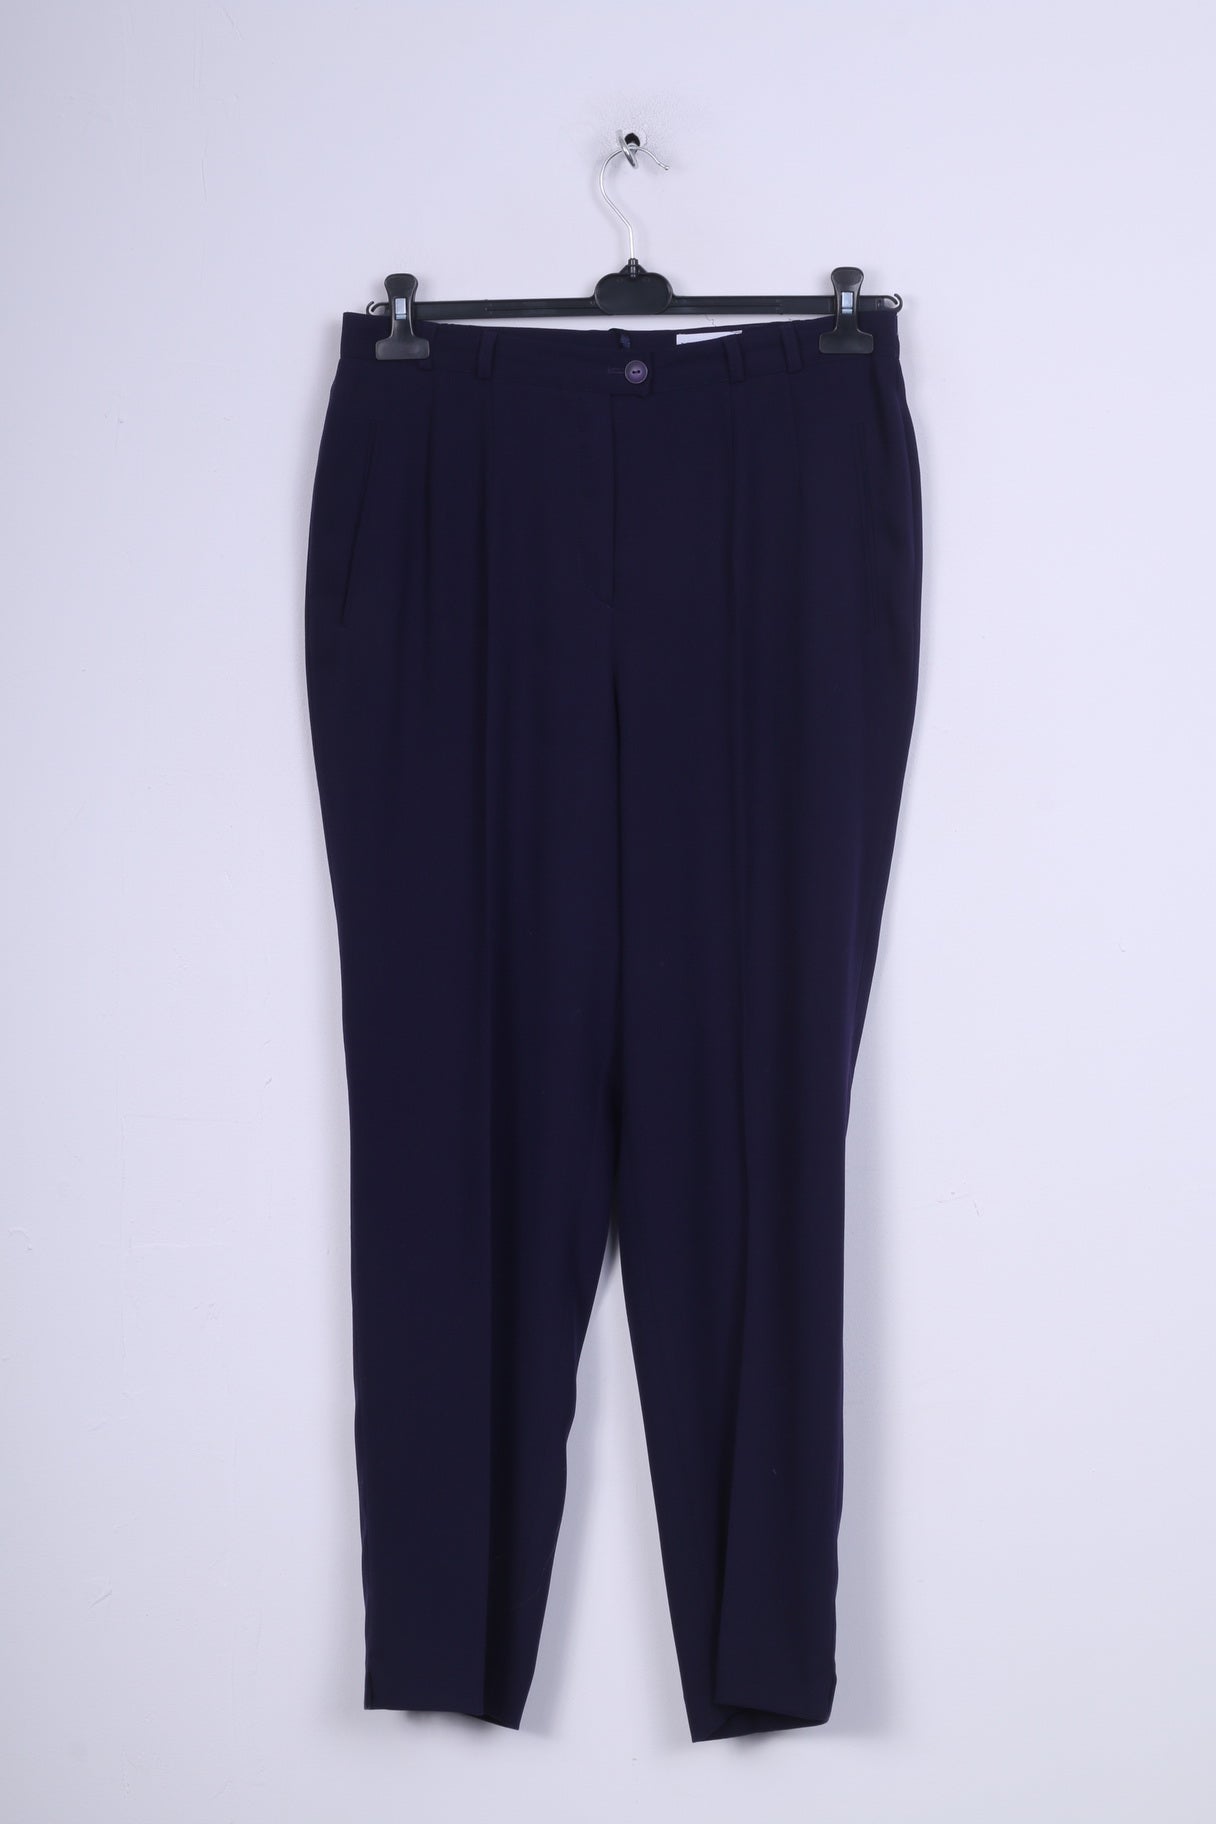 Marcona Womens 18 Elegant Pants Trousers Violet Exclusive Design